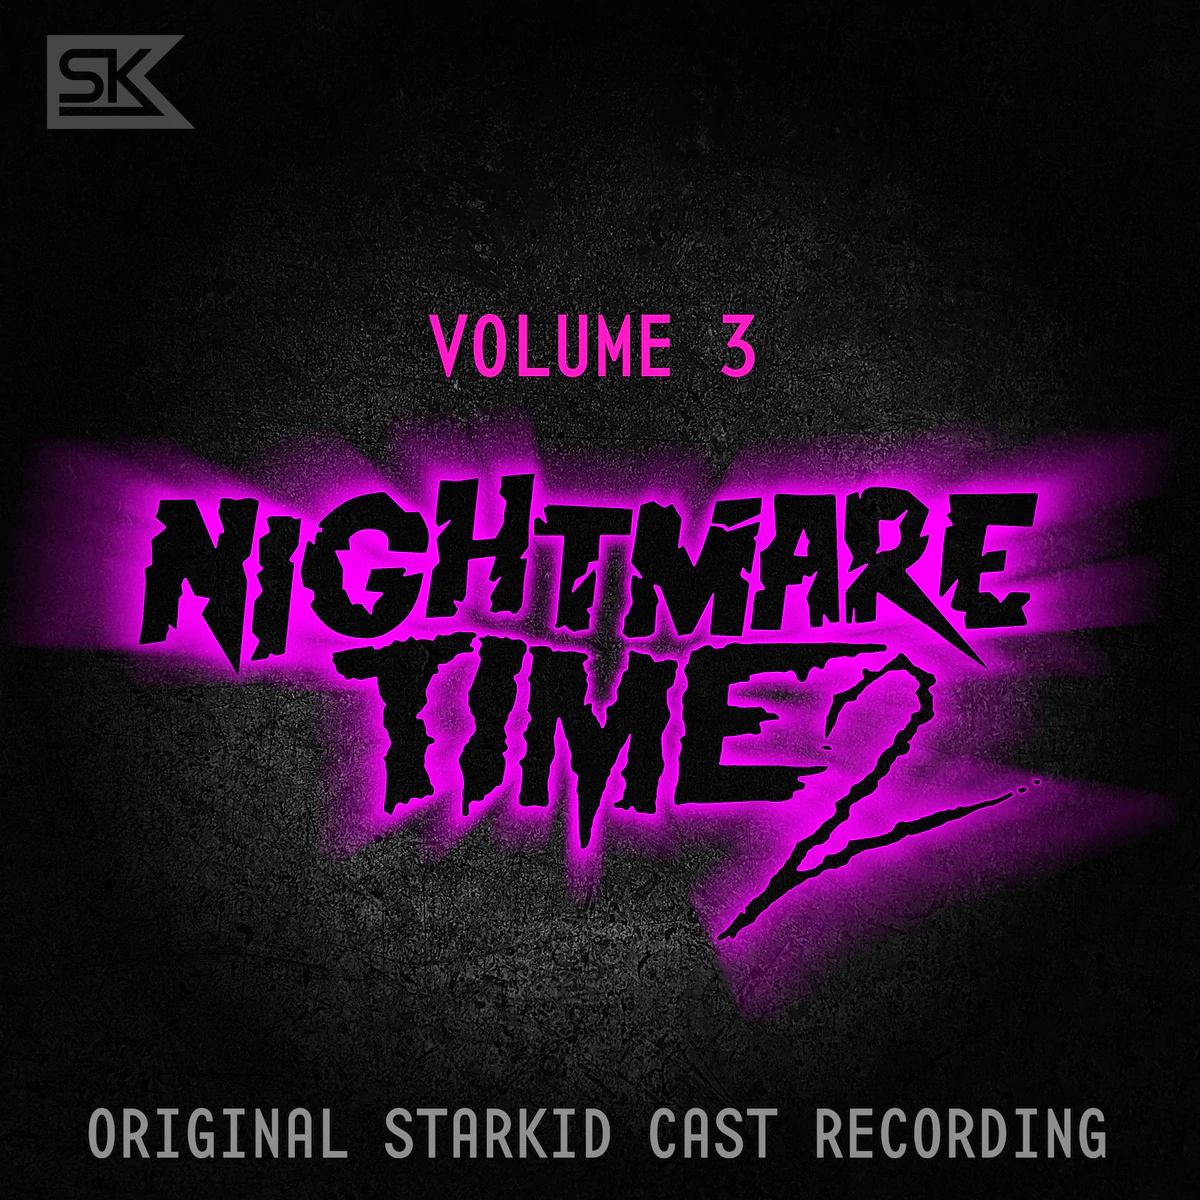 Original StarKid Cast of Nightmare Time 2 Nightmare Time 2, Vol. 3 (Original StarKid Cast Recording) cover artwork